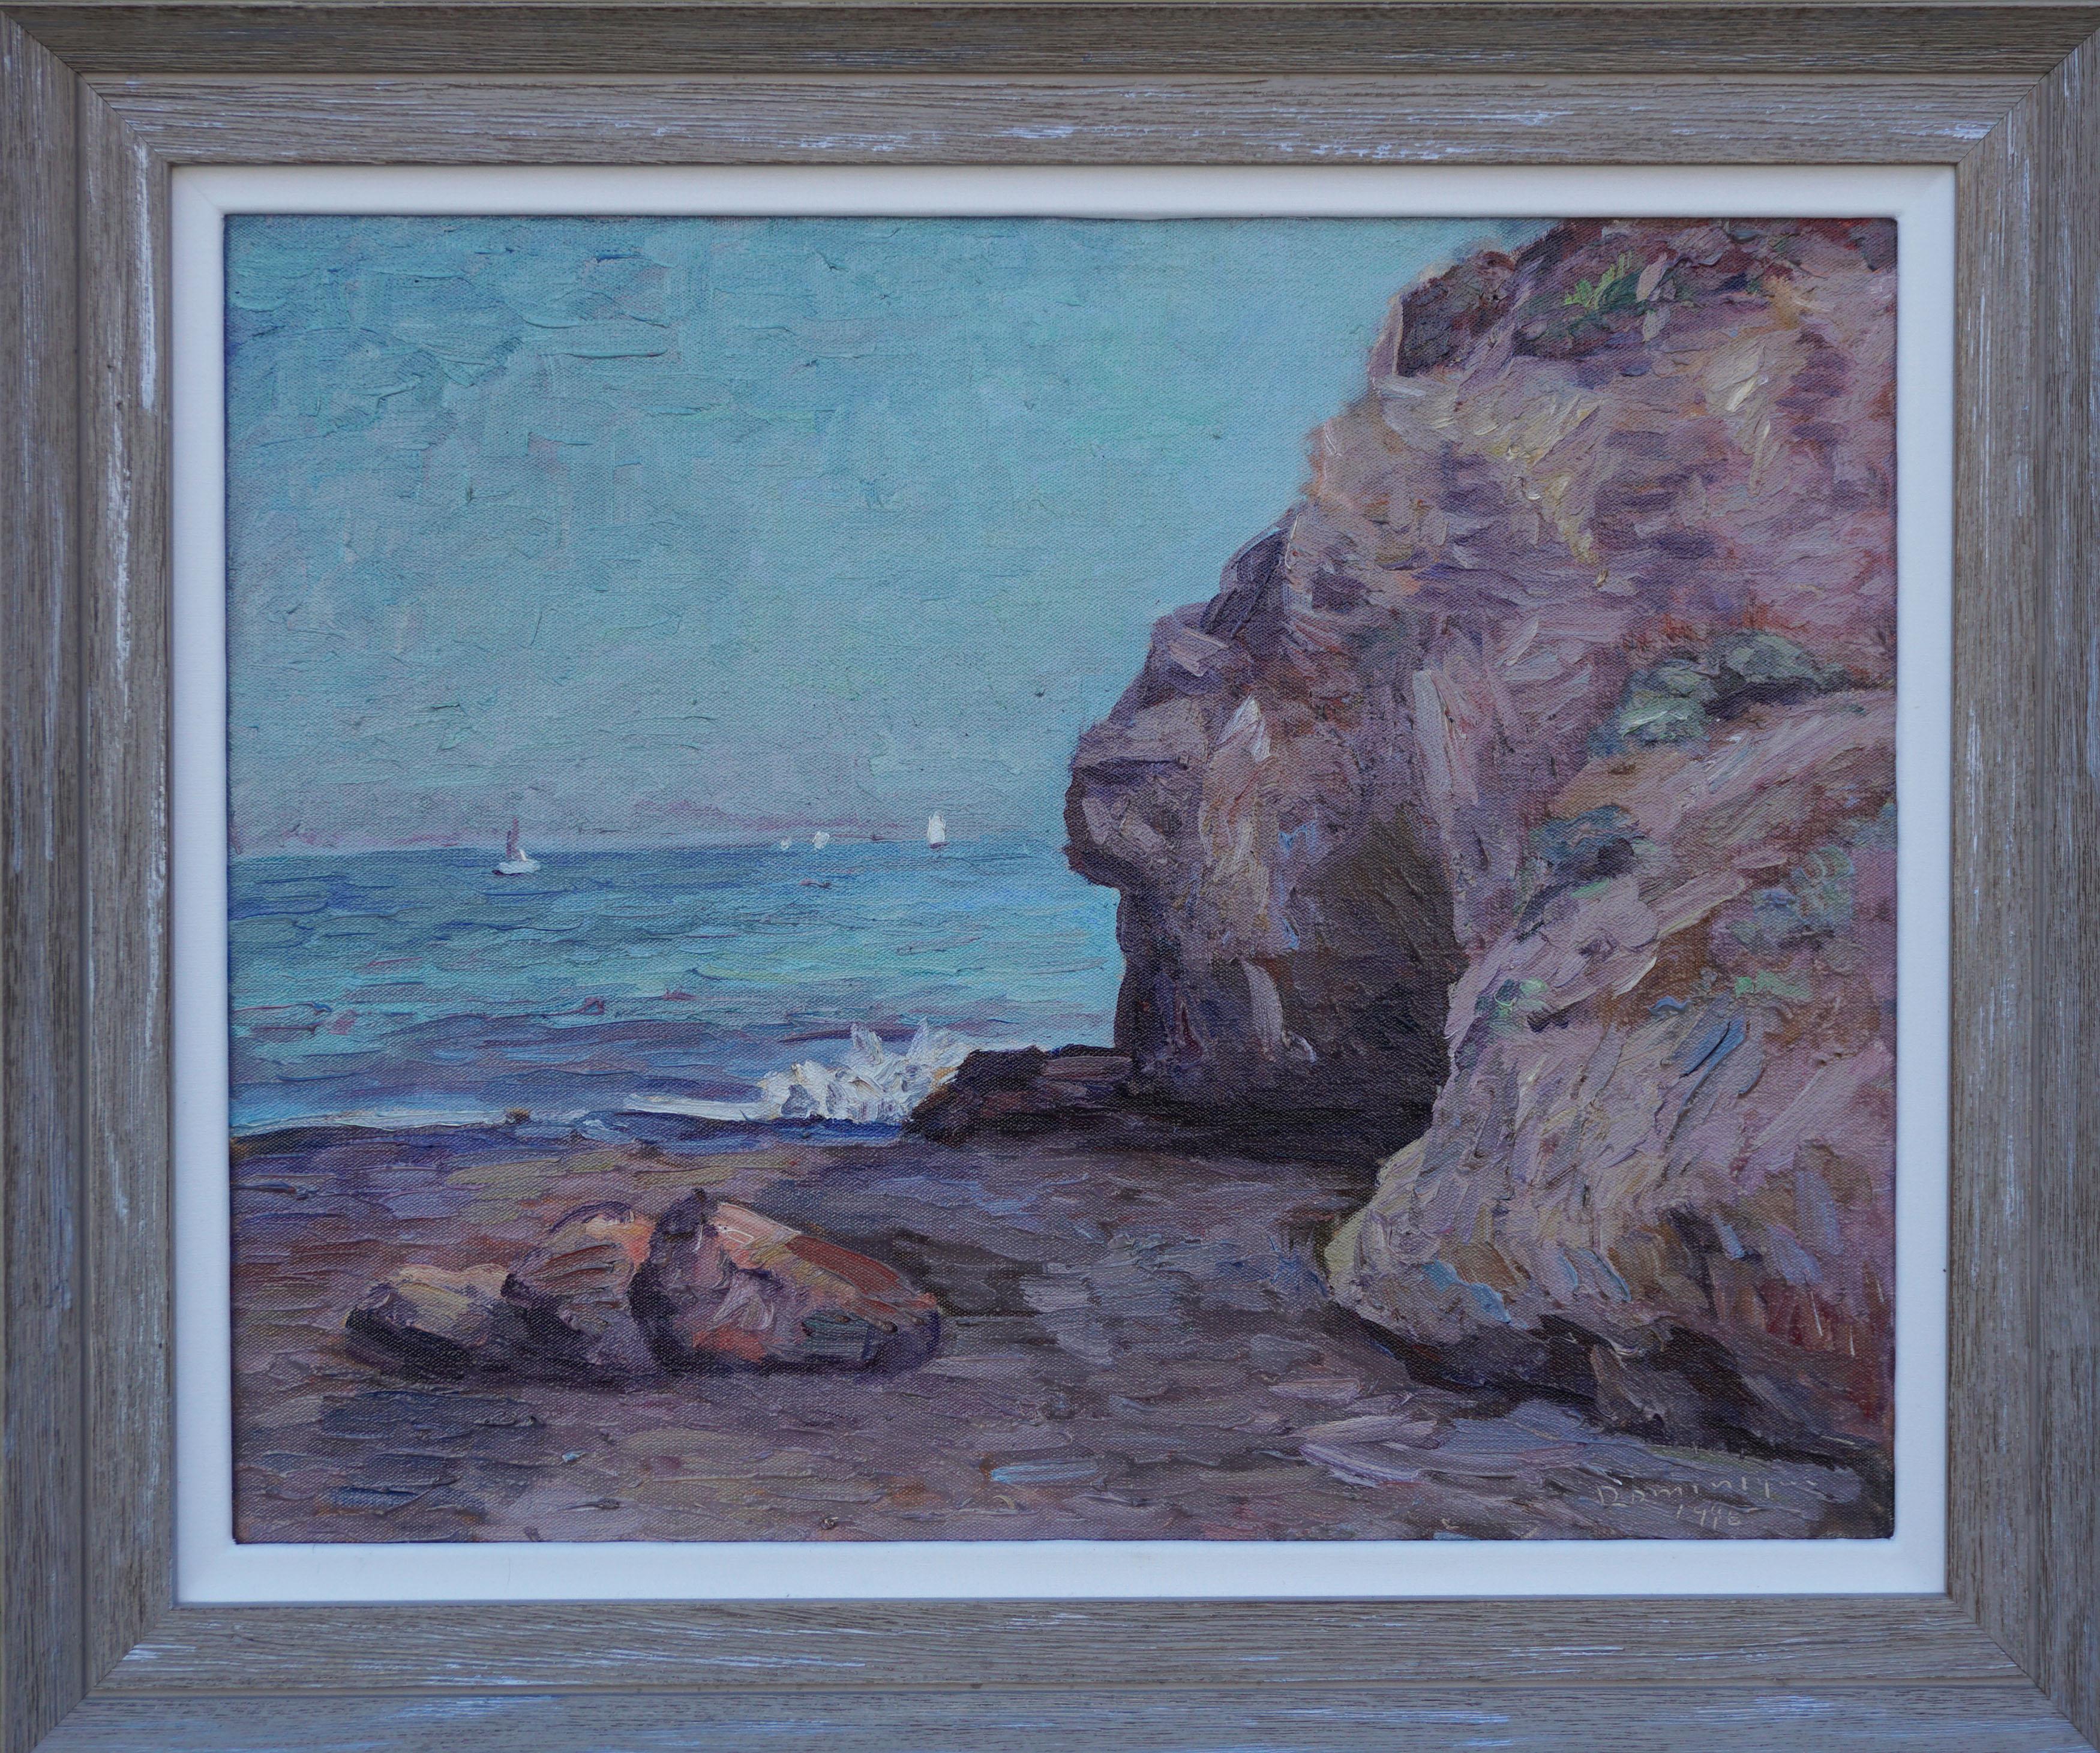 John Dominque Landscape Painting - Sailing Near Santa Barbara, Mid Century Coastal Seascape with Sailboats